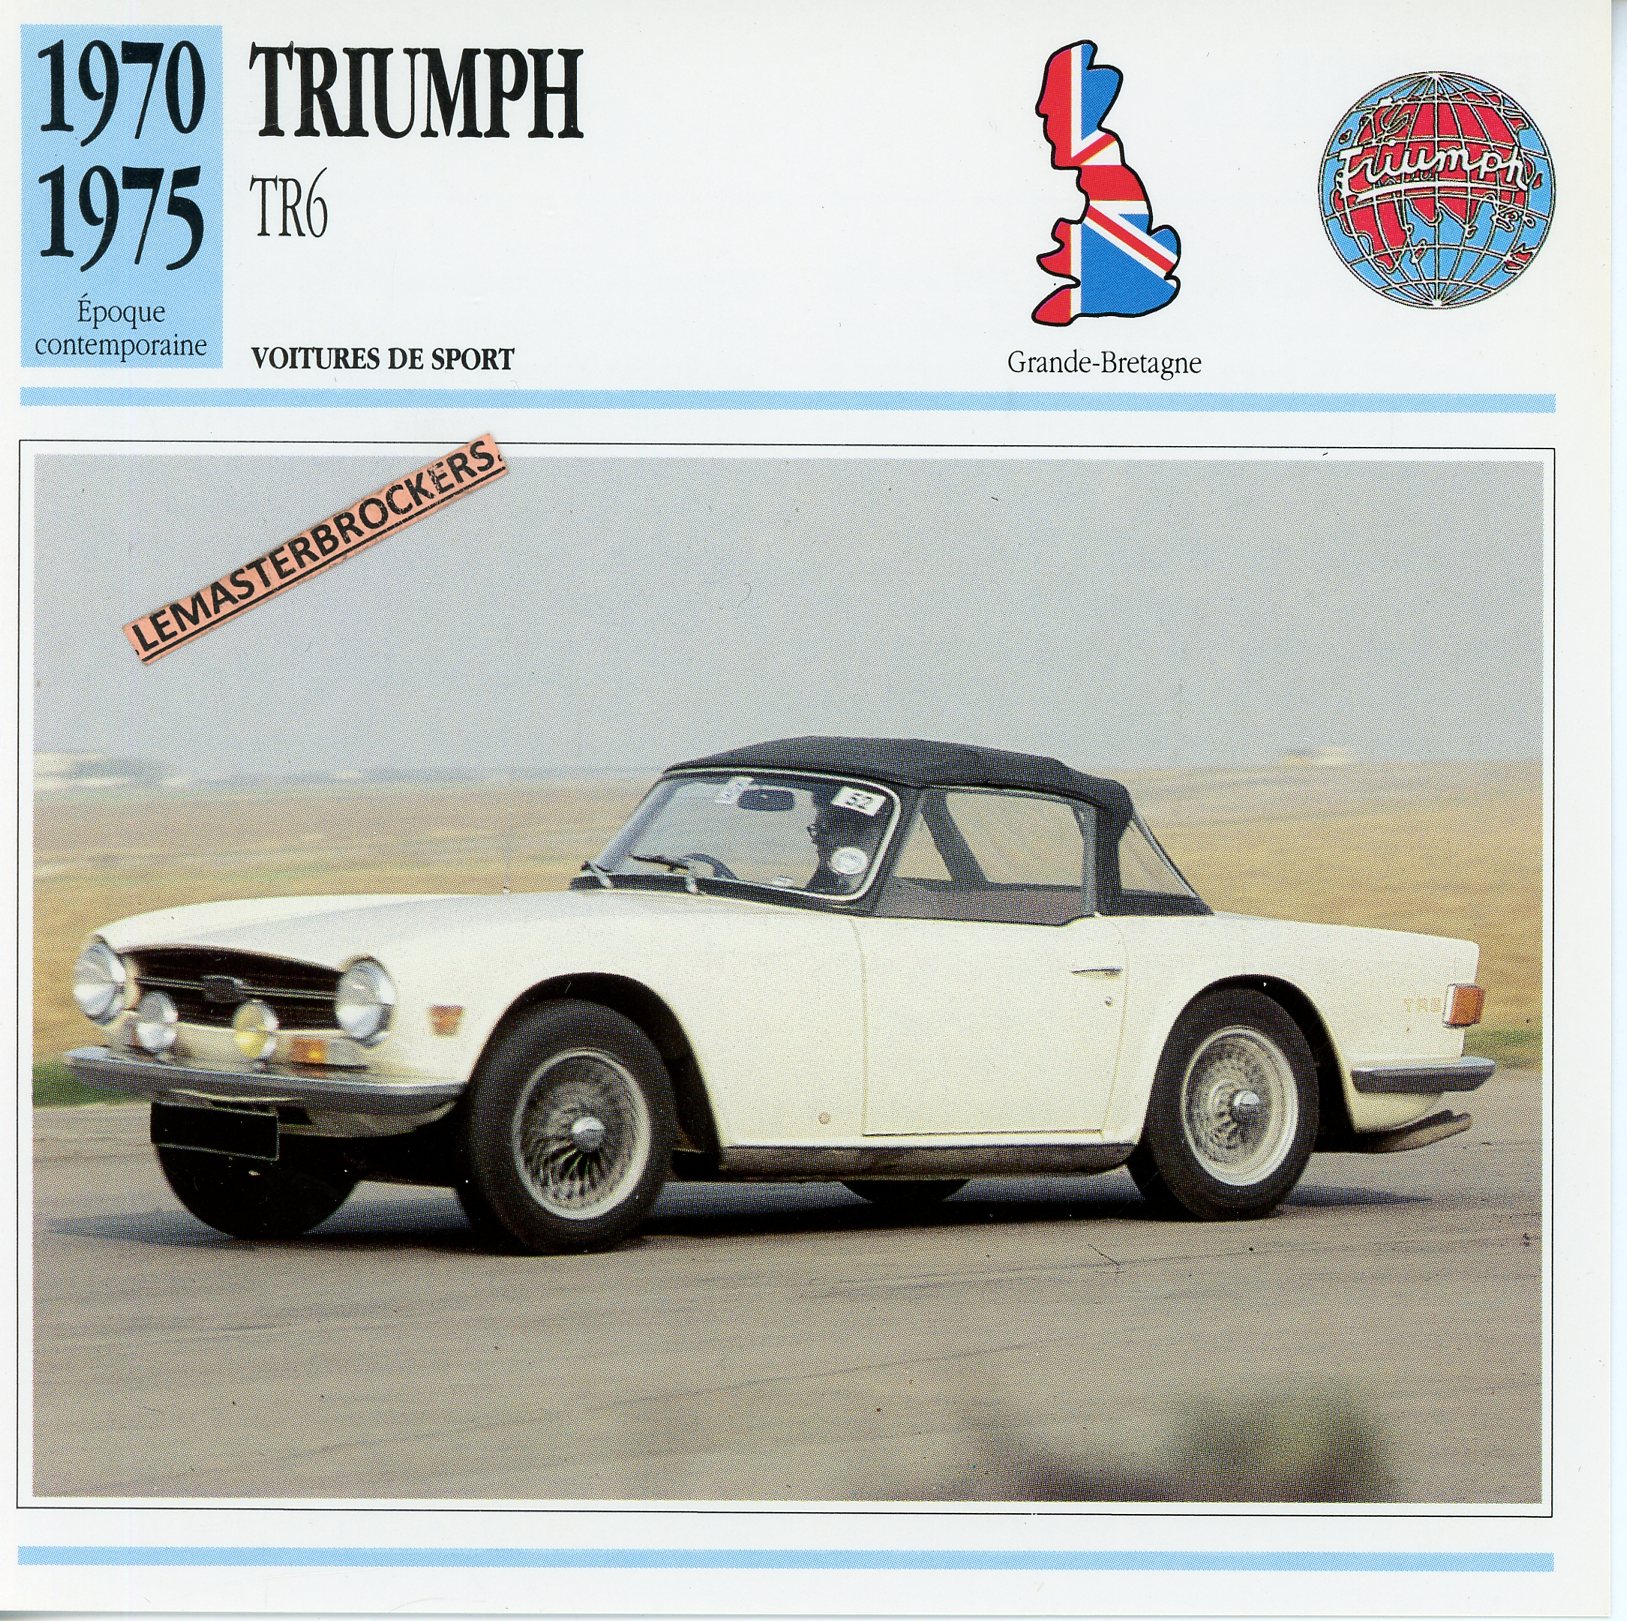 TRIUMPH-TR6-1970-1975-FICHE-AUTO-ATLAS-LEMASTERBROCKERS